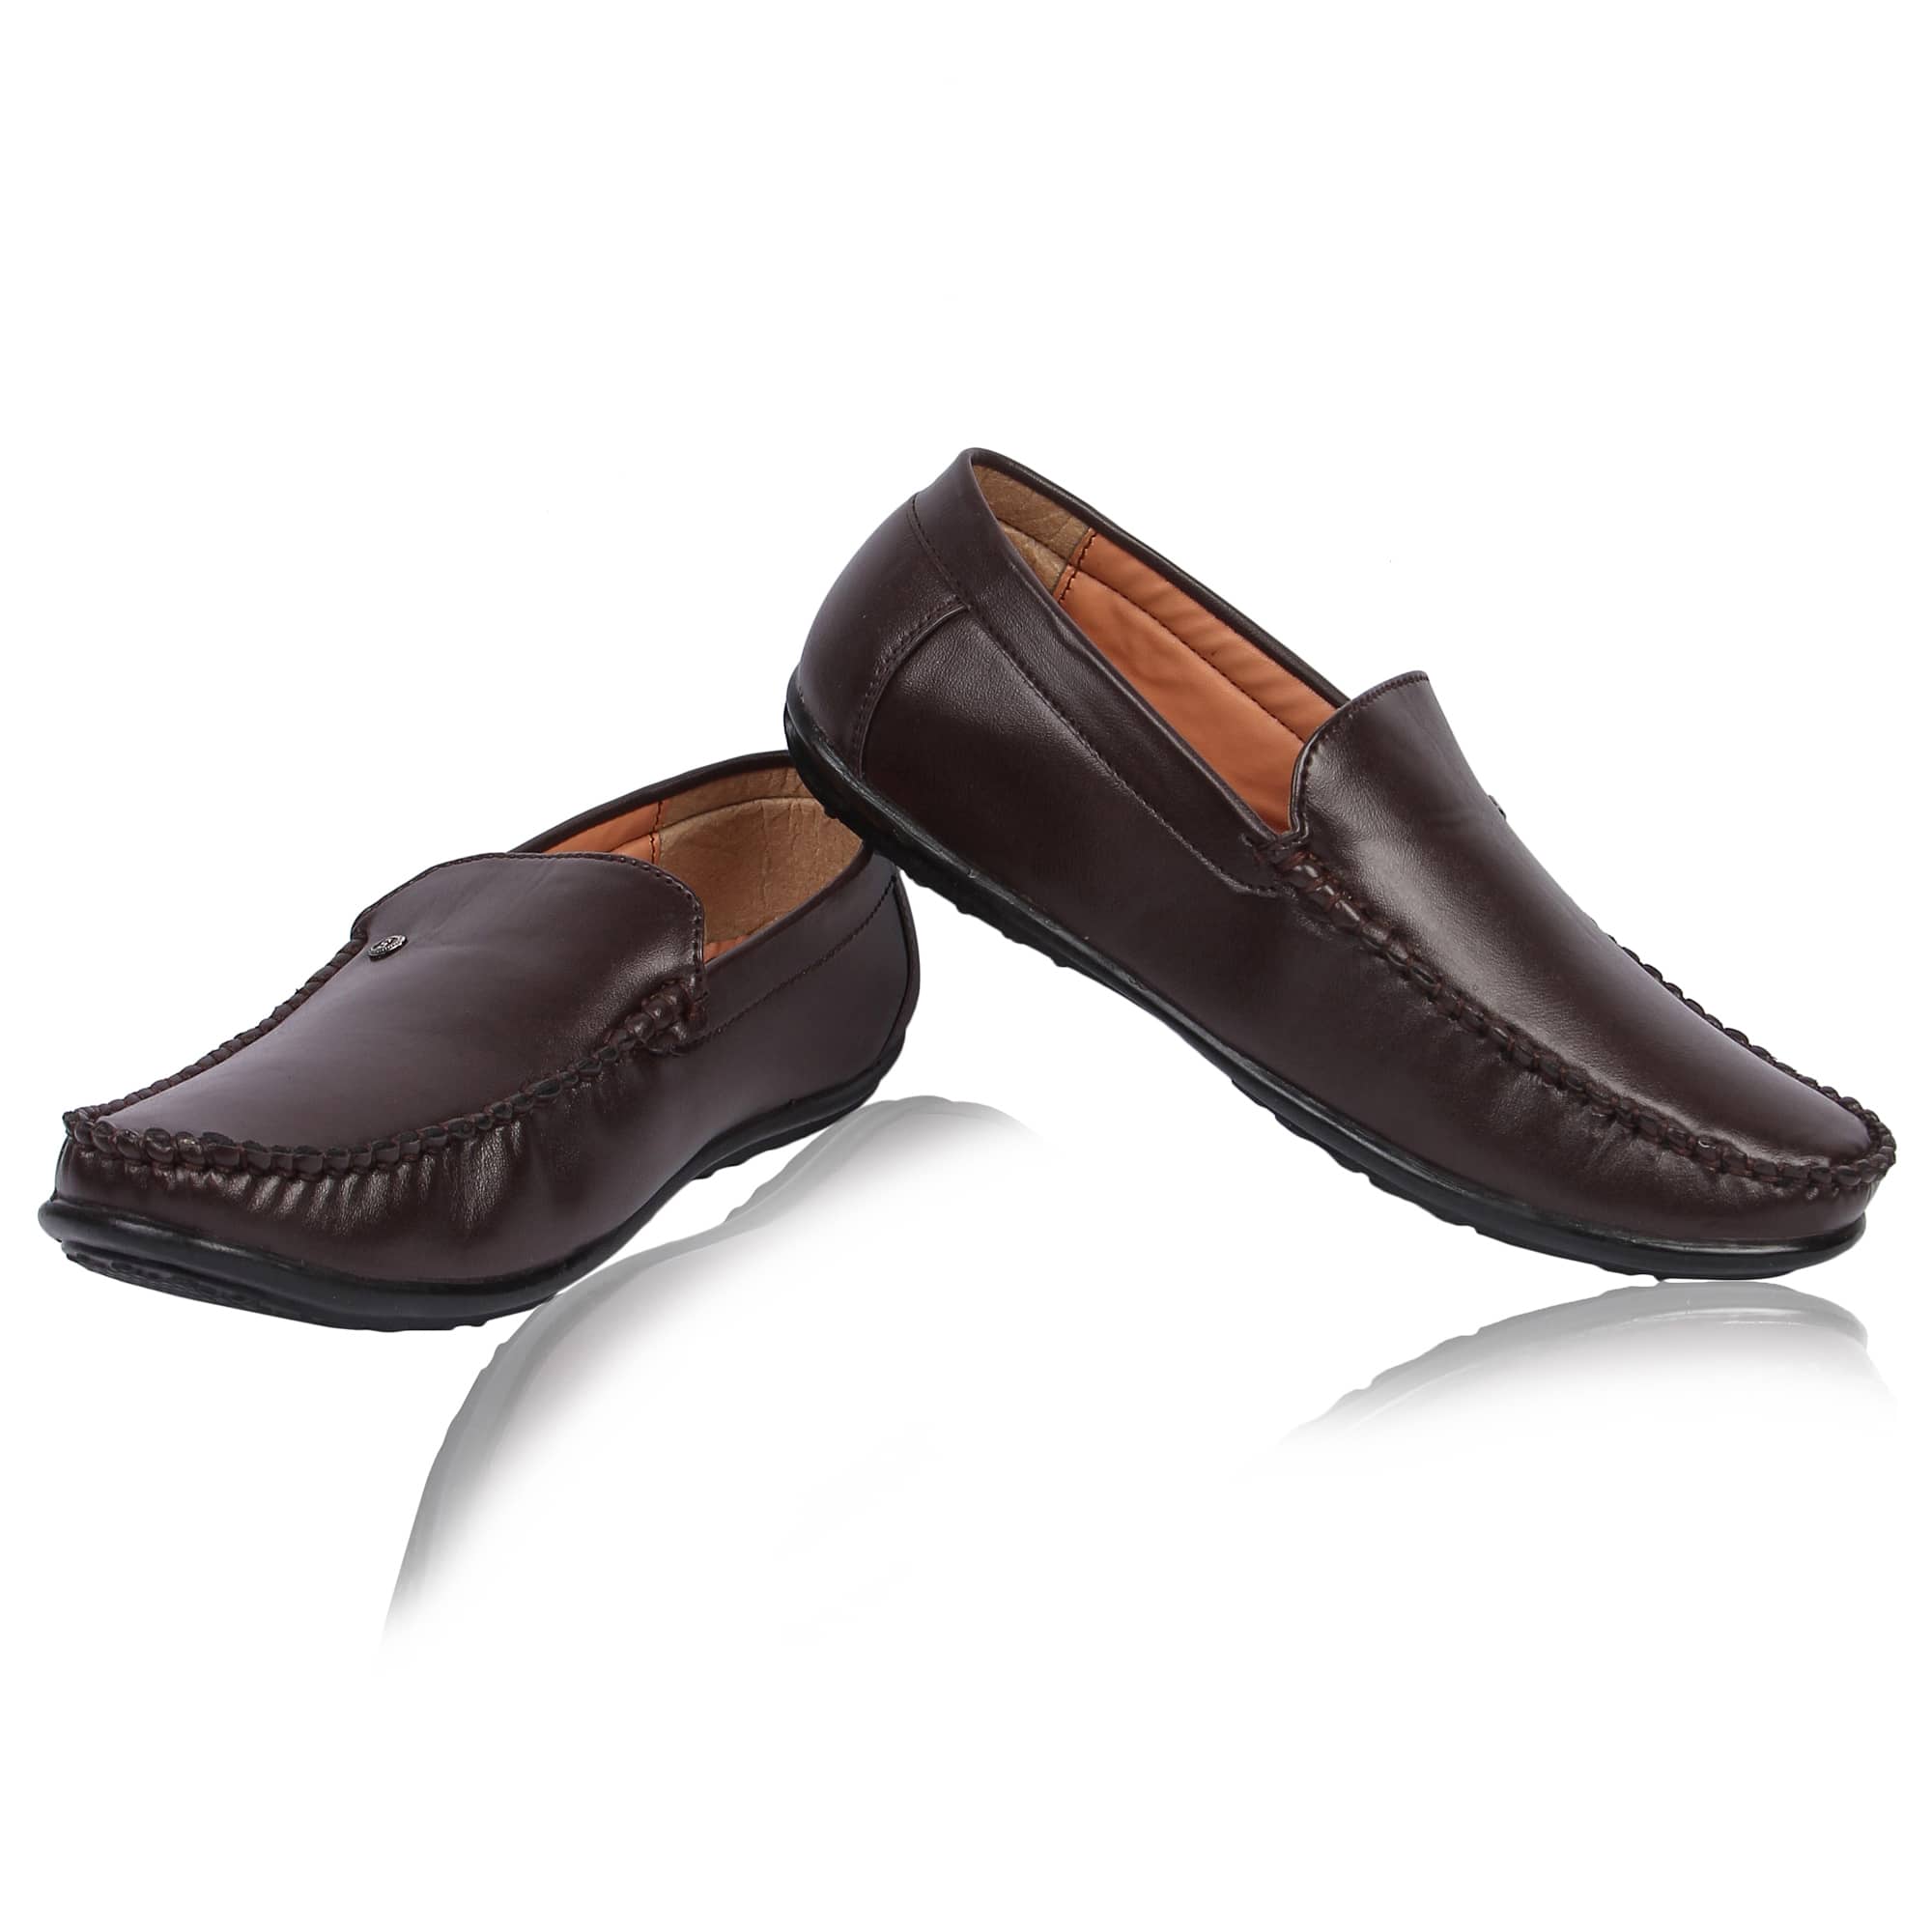 IMG_0178-min | Online Store for Men Footwear in India